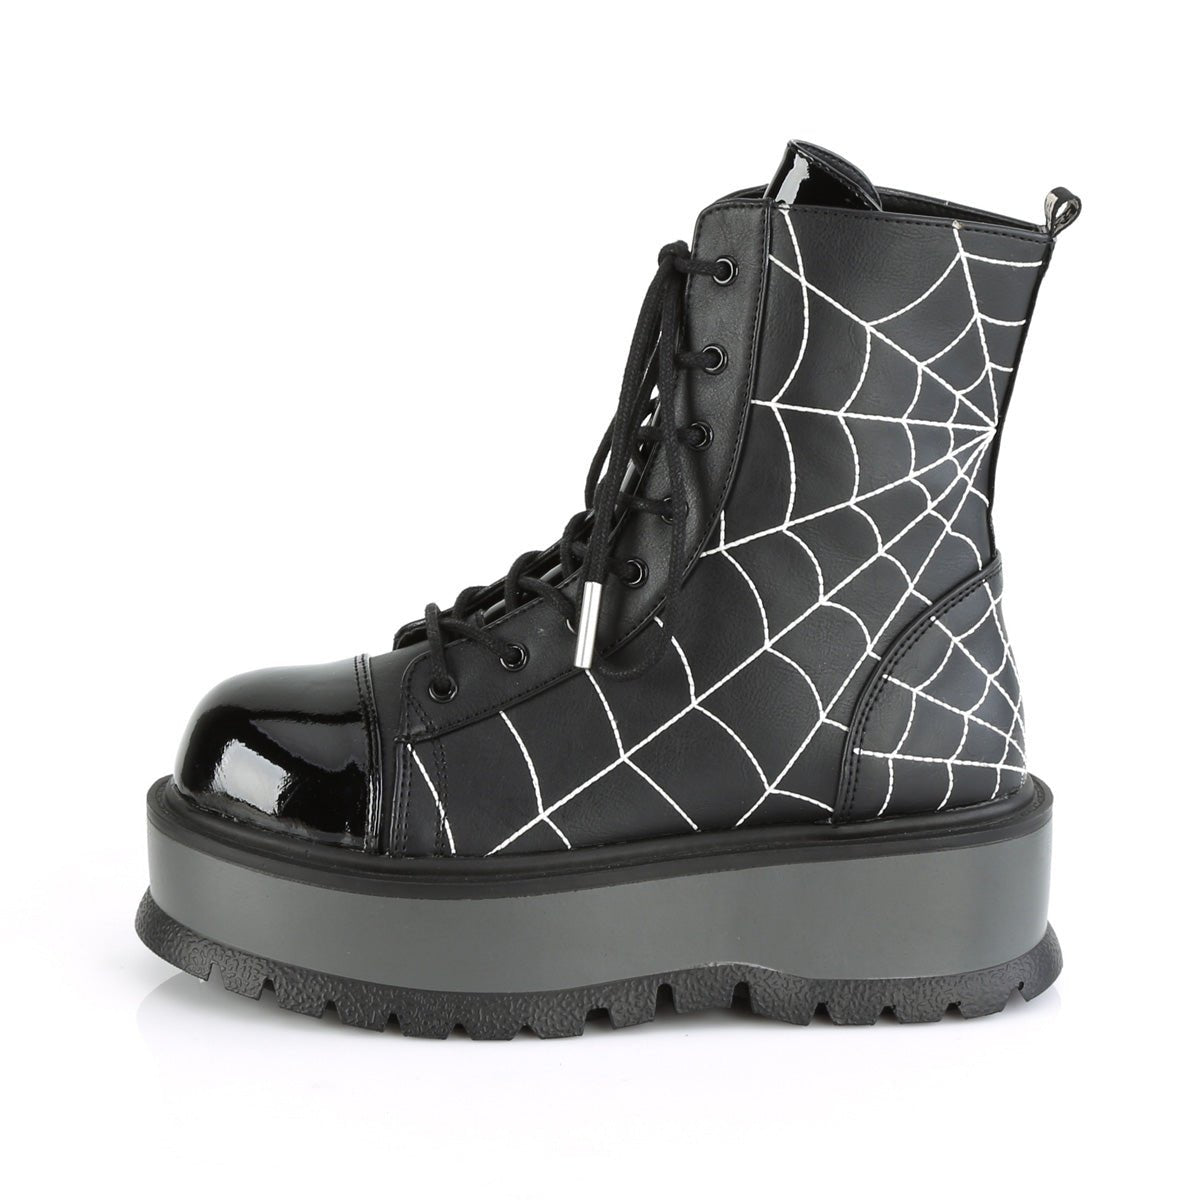 Too Fast | Demonia SLACKER-88 Black Vegan Patent Leather Ankle Boots